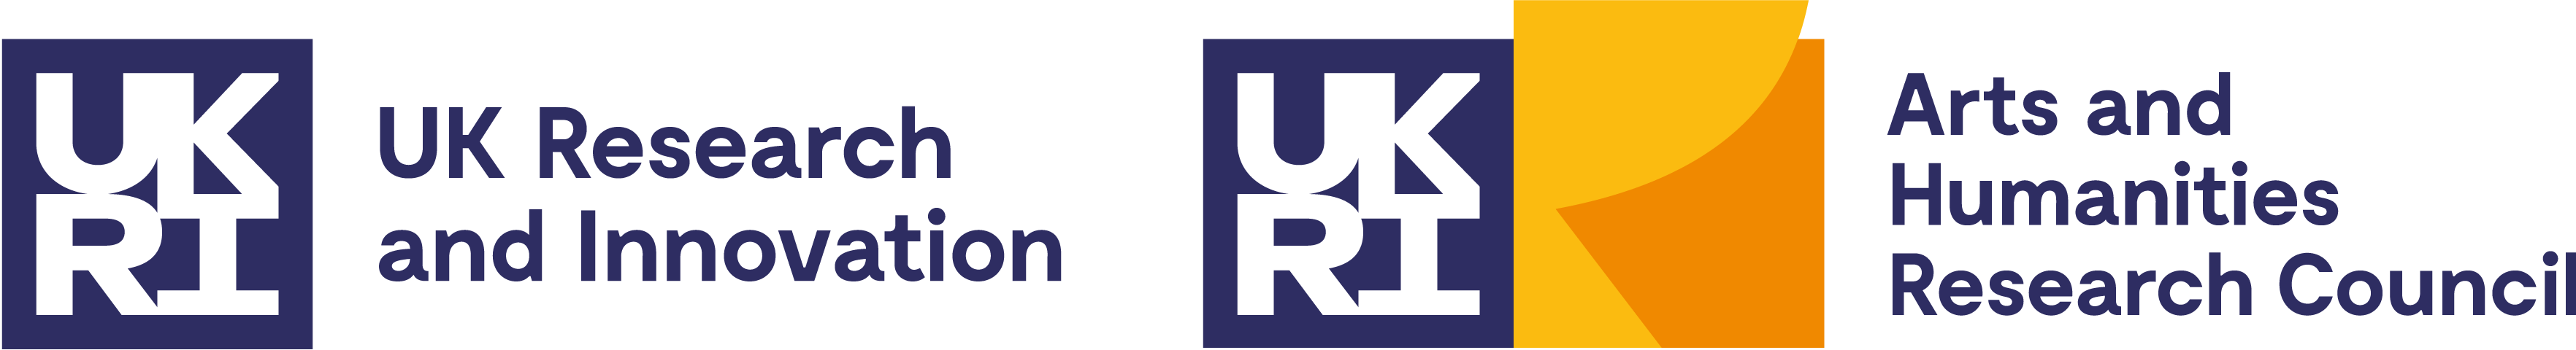 UKRI and ARHC combined logos